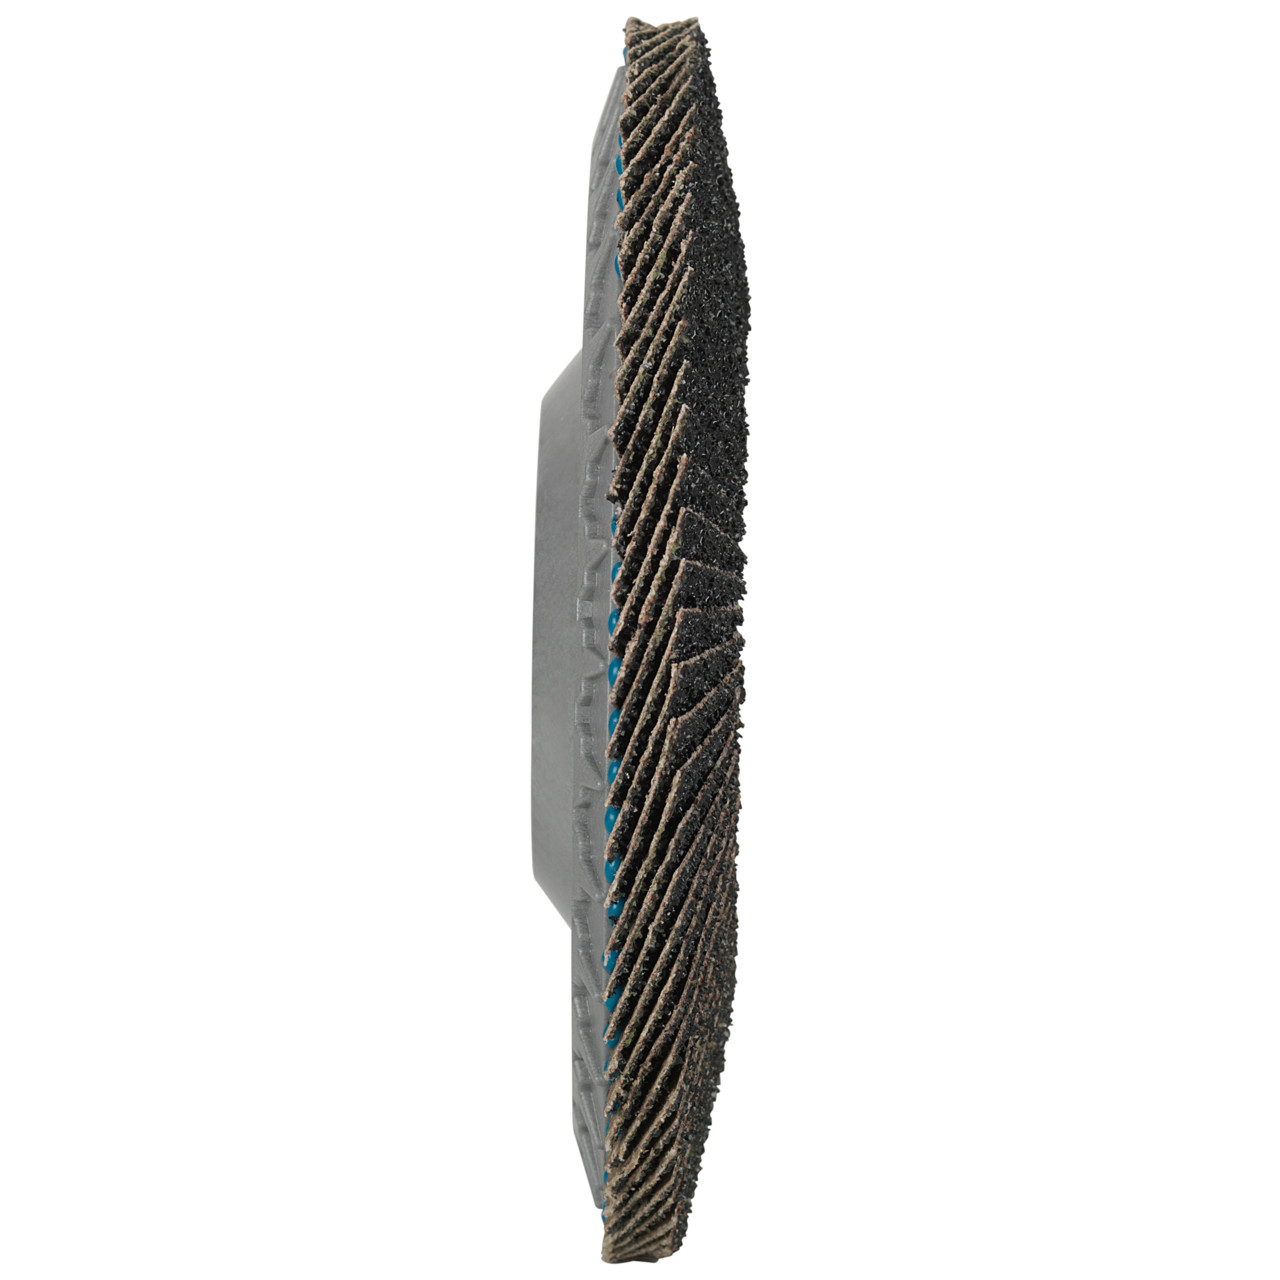 Rondella dentata Tyrolit DxH 178x22.23 LONGLIFE C-TRIM per acciaio e acciaio inox, P40, forma: 28N - versione diritta (corpo portante in plastica), Art. 34239199